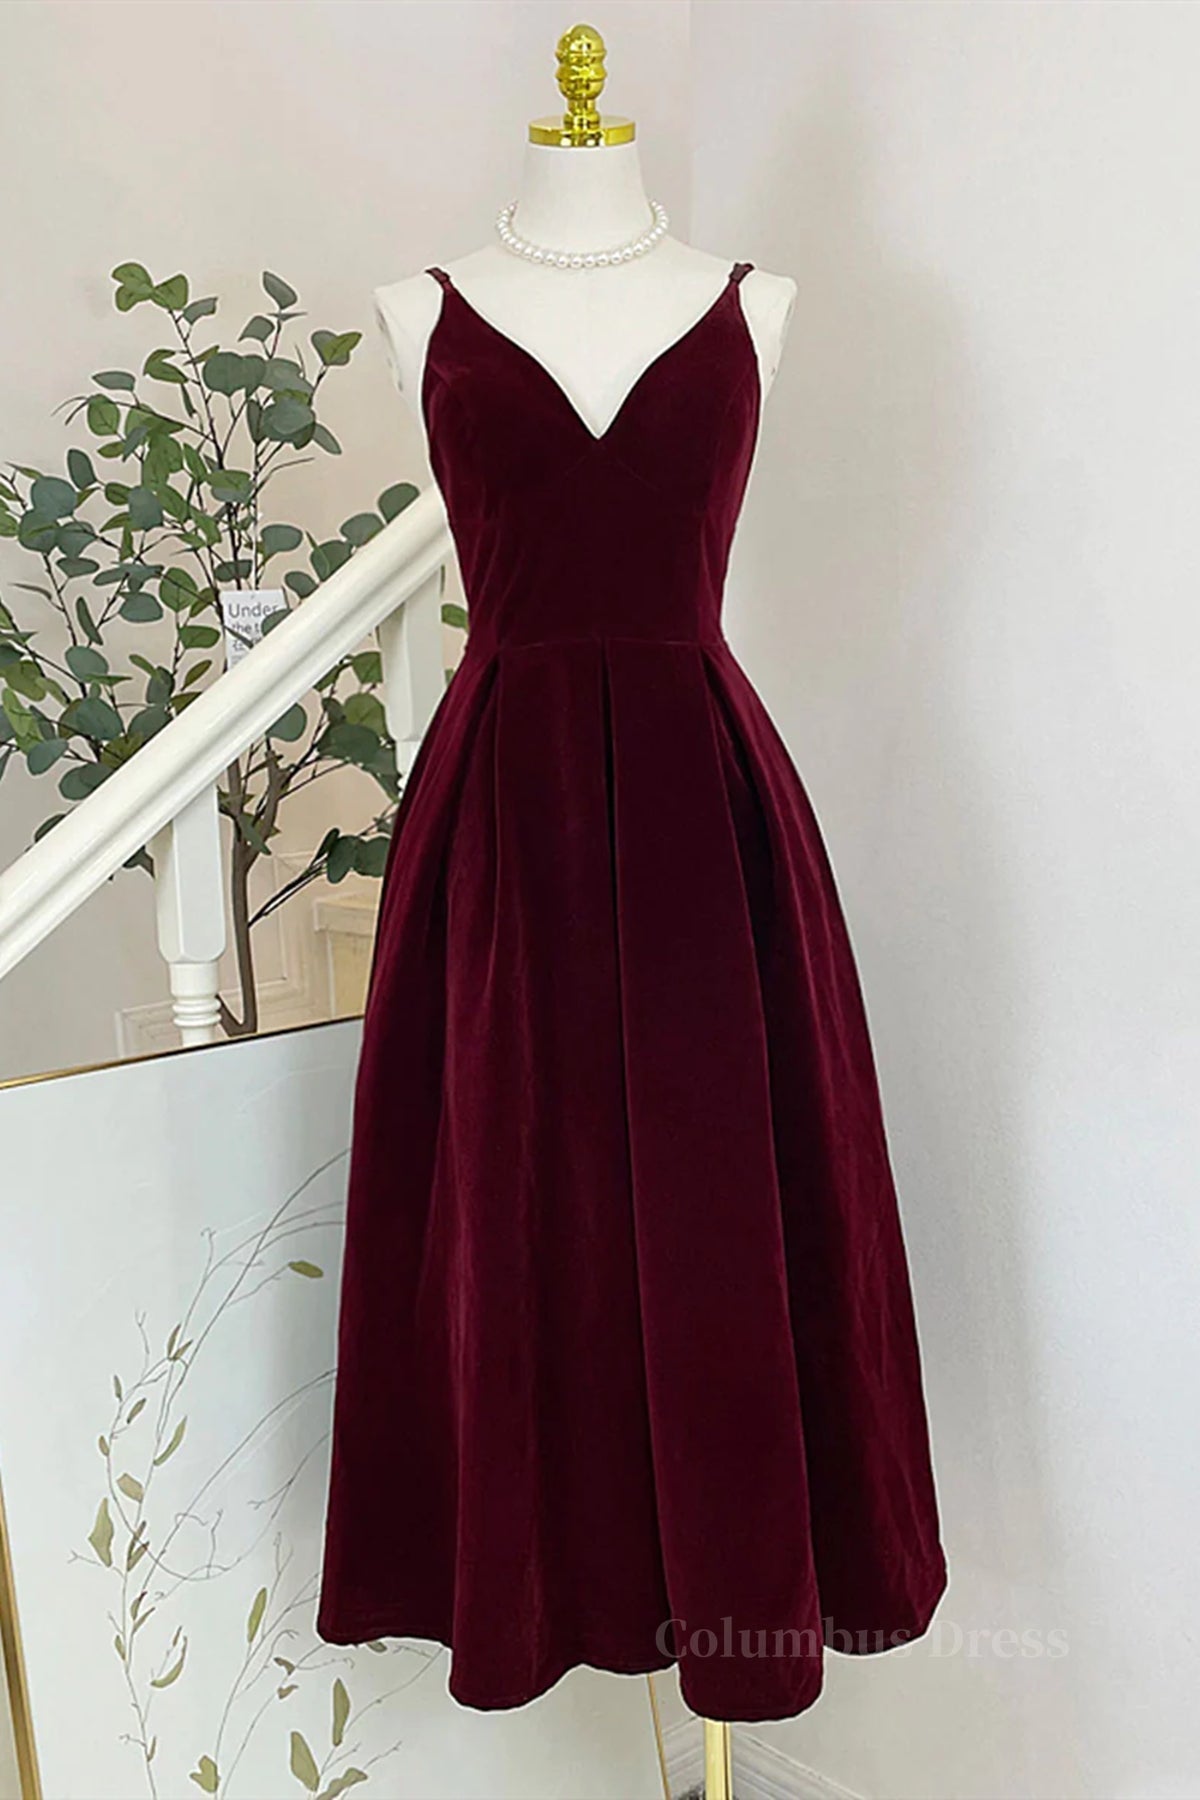 A Line V Neck Burgundy Black Tea Length Corset Prom Dresses, Short Black Wine Red Corset Formal Corset Homecoming Dresses outfit, Evening Dress Dresses